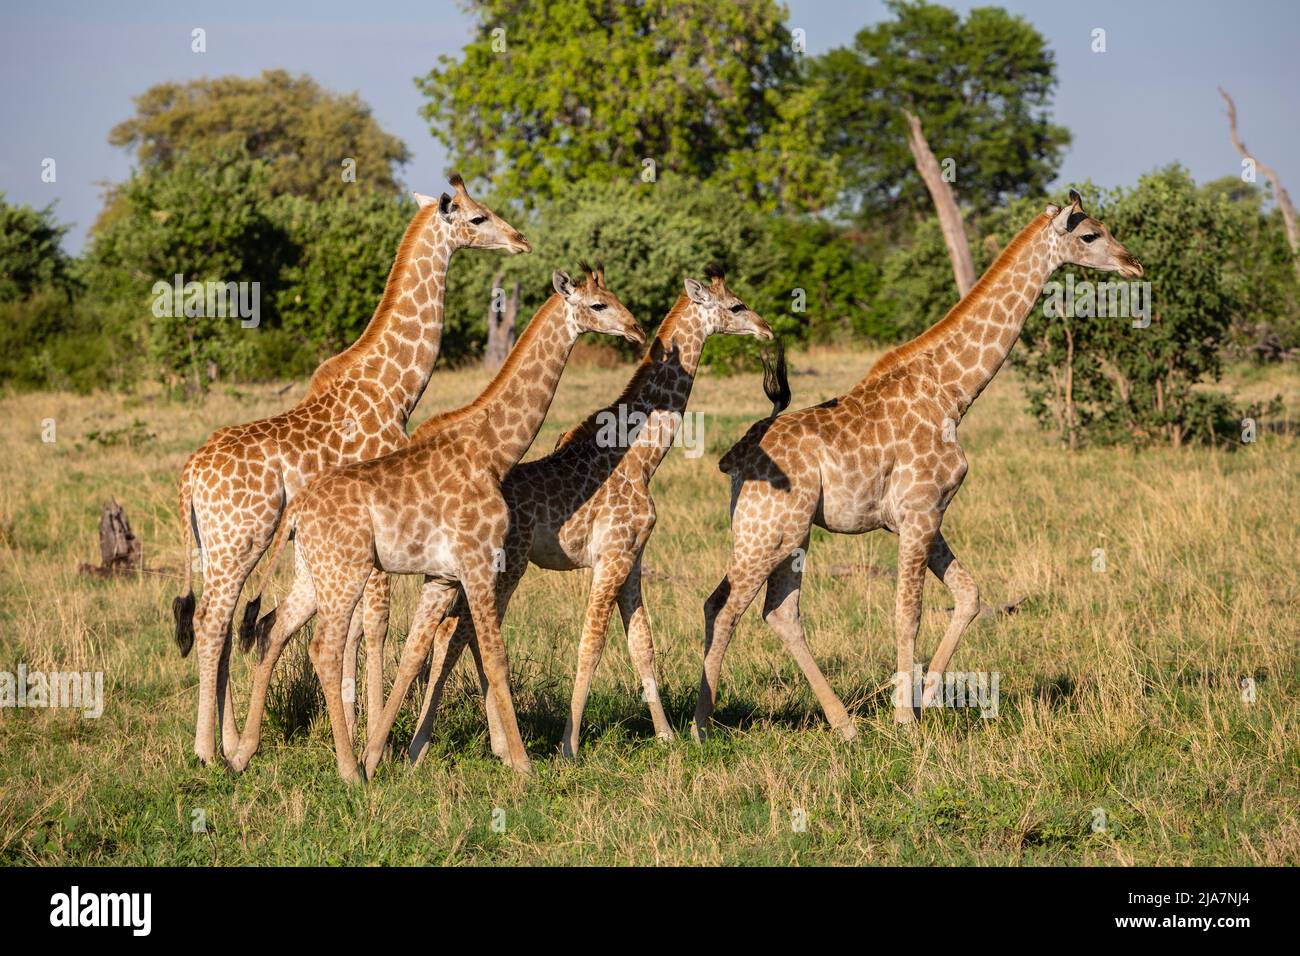 Southern giraffe of the Okavango Delta grassland, Botswana Stock Photo